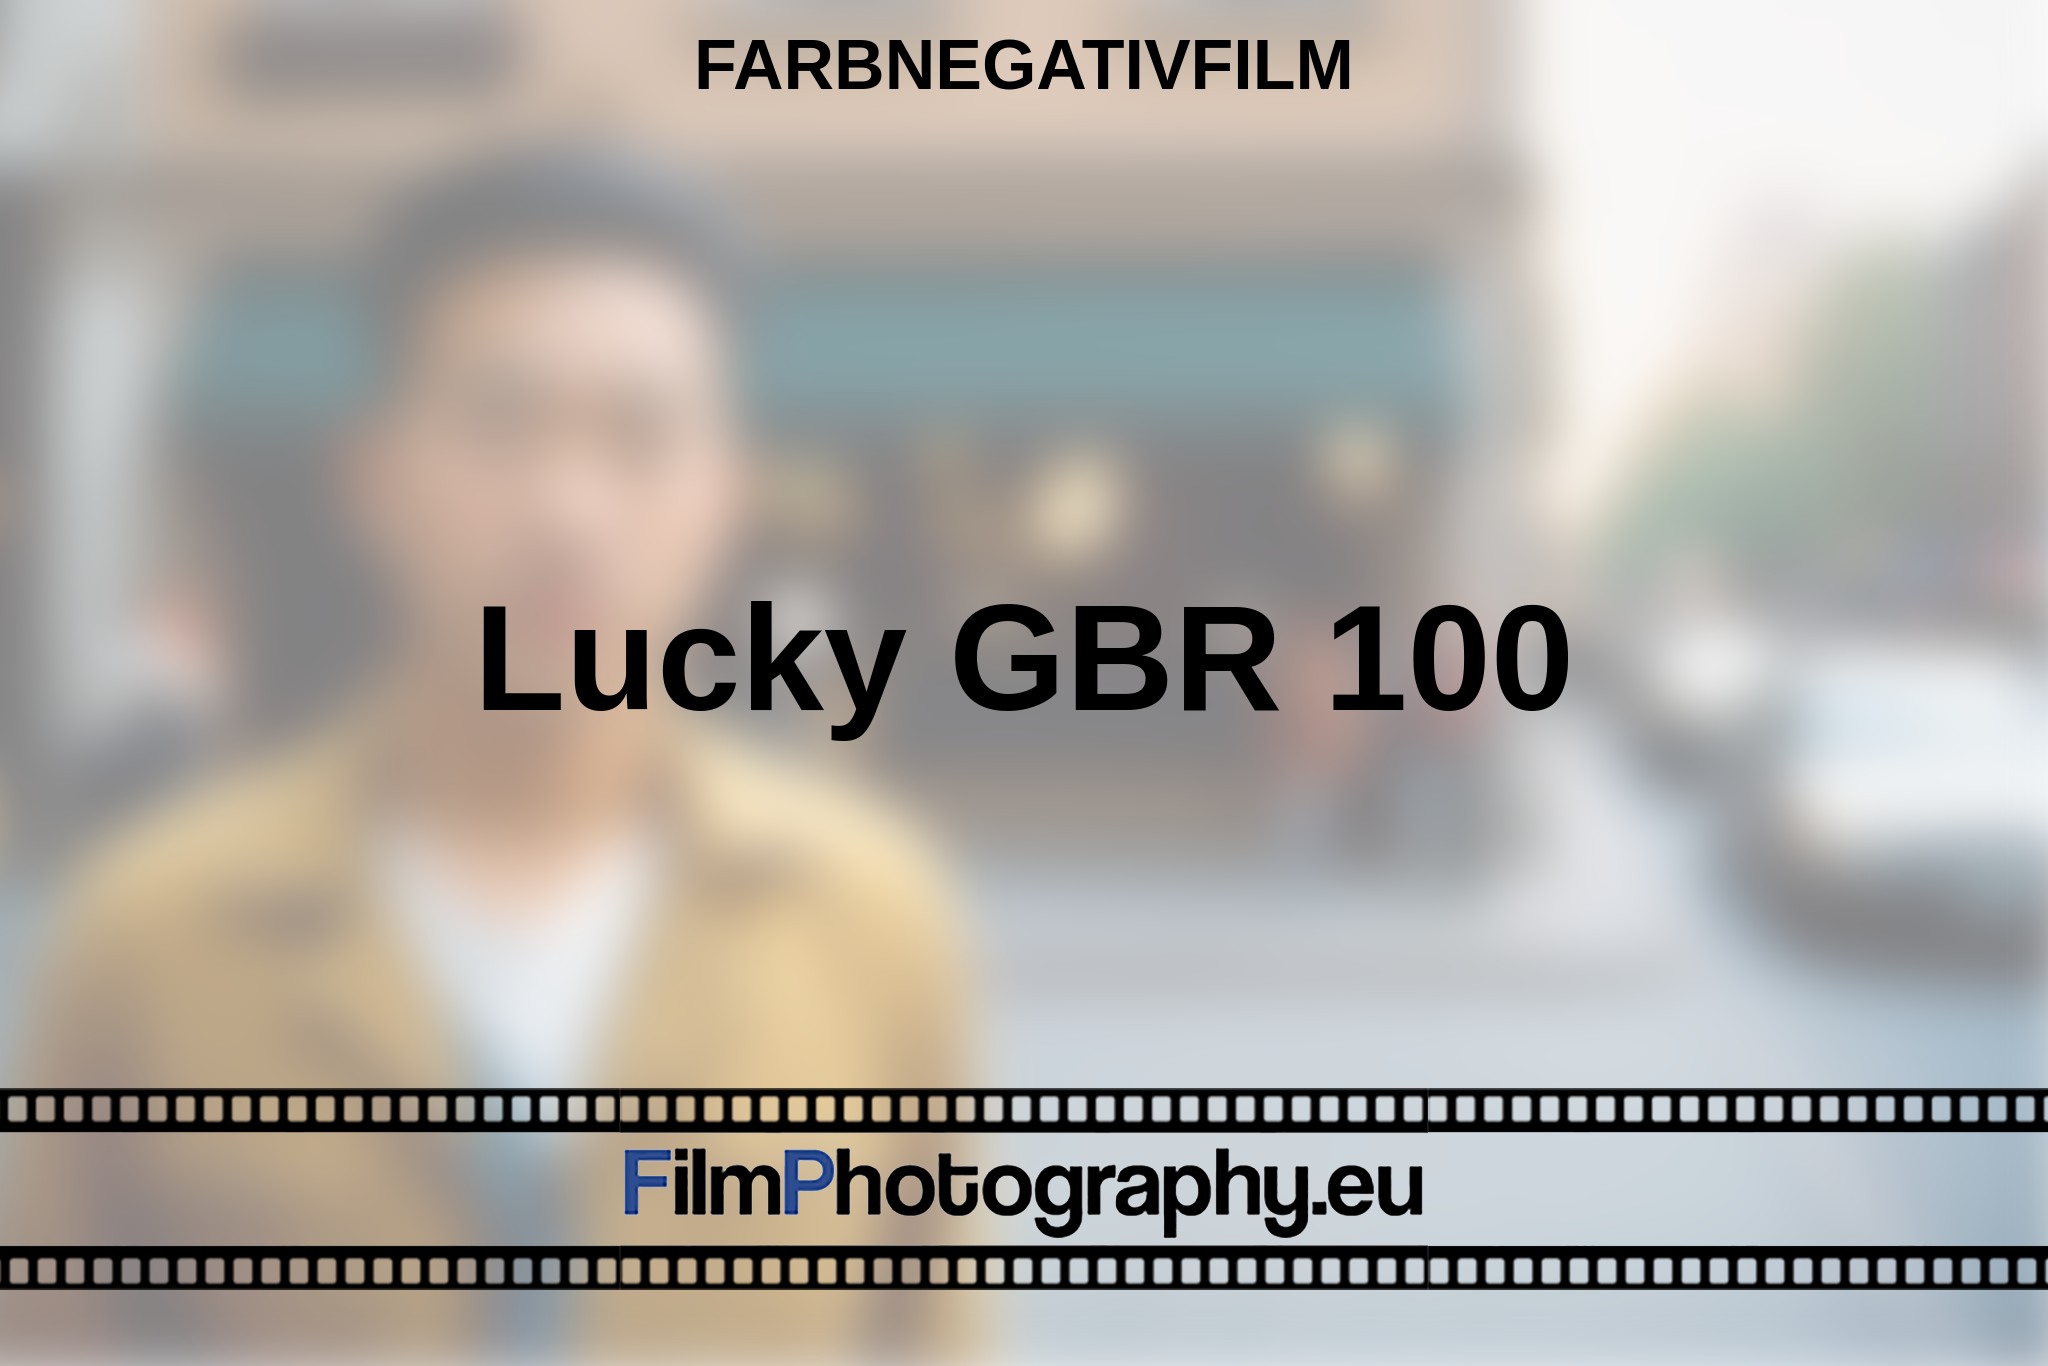 lucky-gbr-100-farbnegativfilm-bnv.jpg